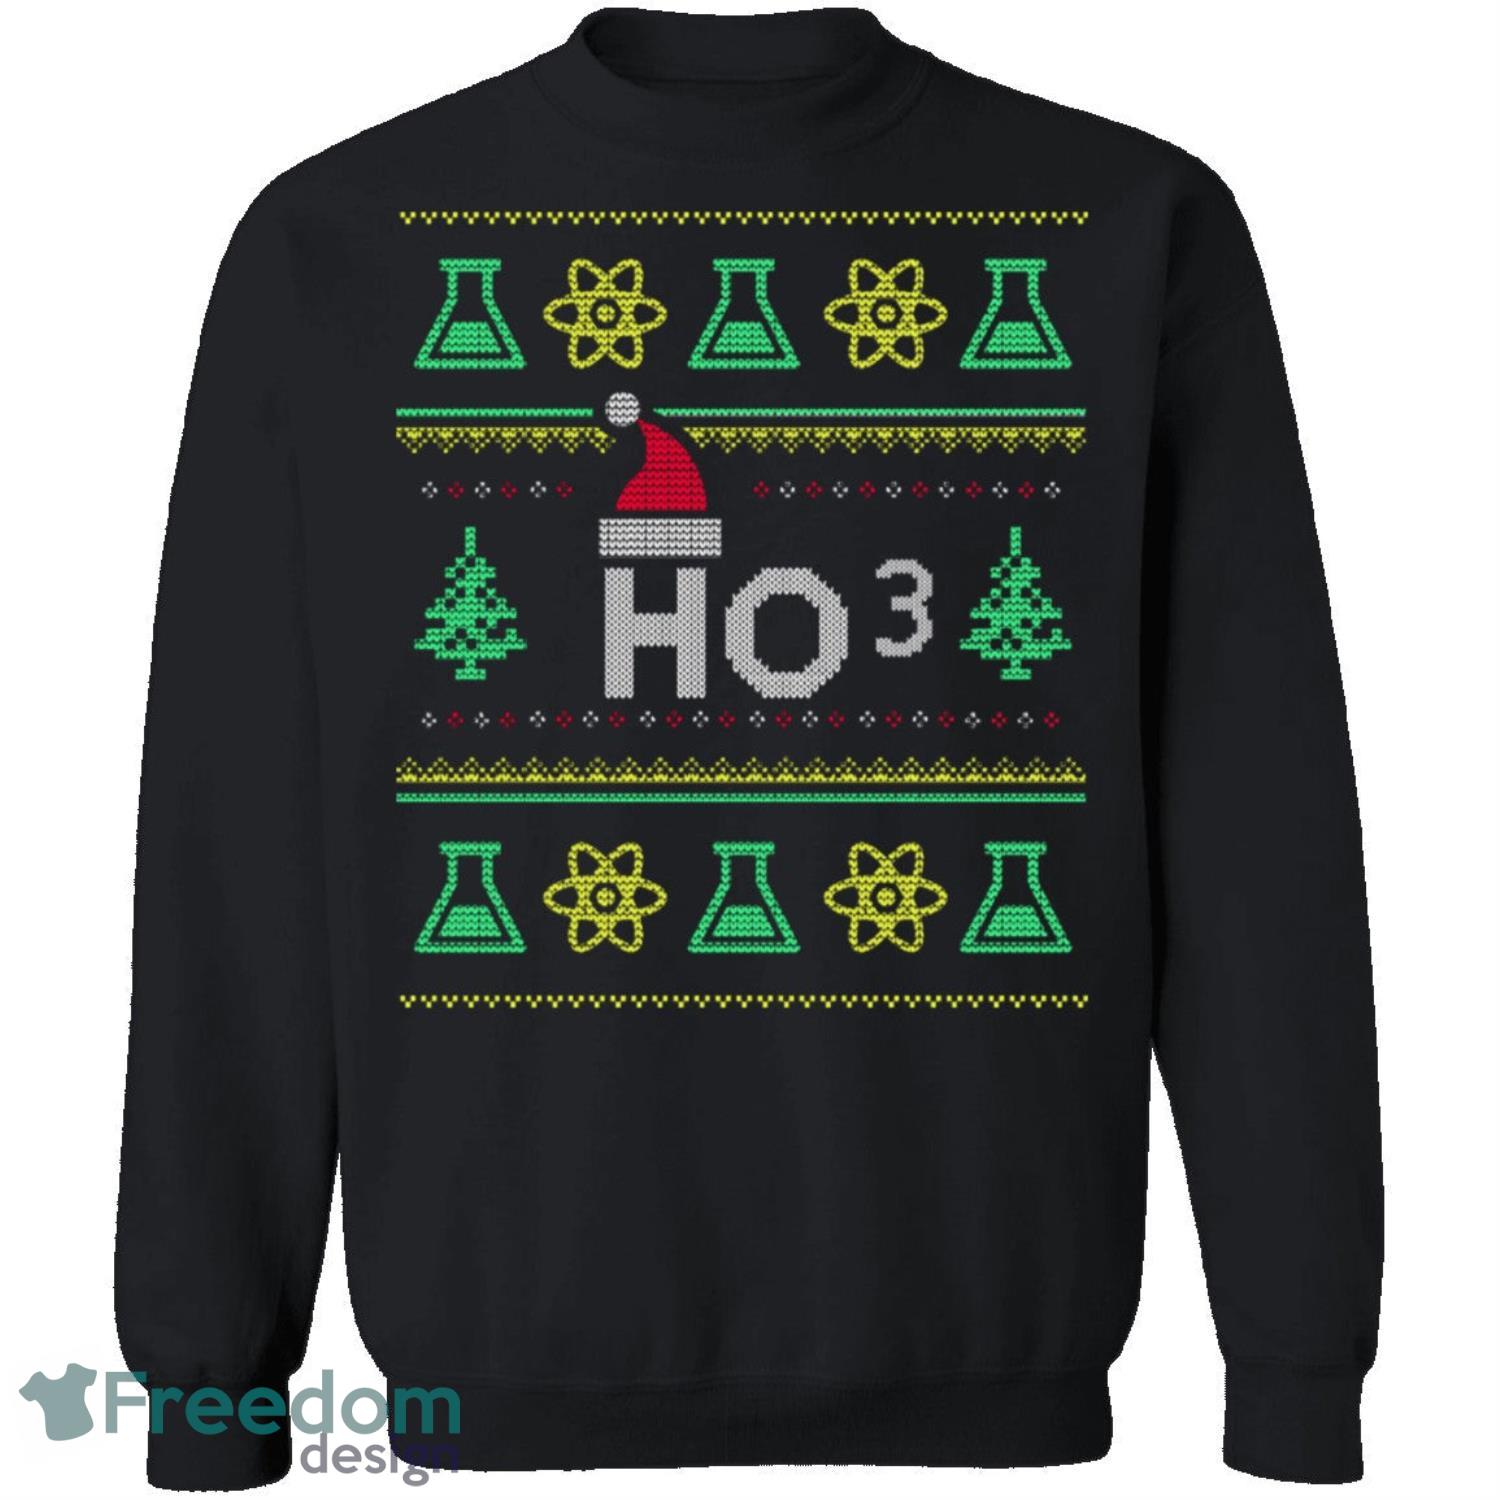 Chemistry Knitting Pattern Ugly Christmas Sweatshirt - chemistry-knitting-pattern-ugly-christmas-sweatshirt-2